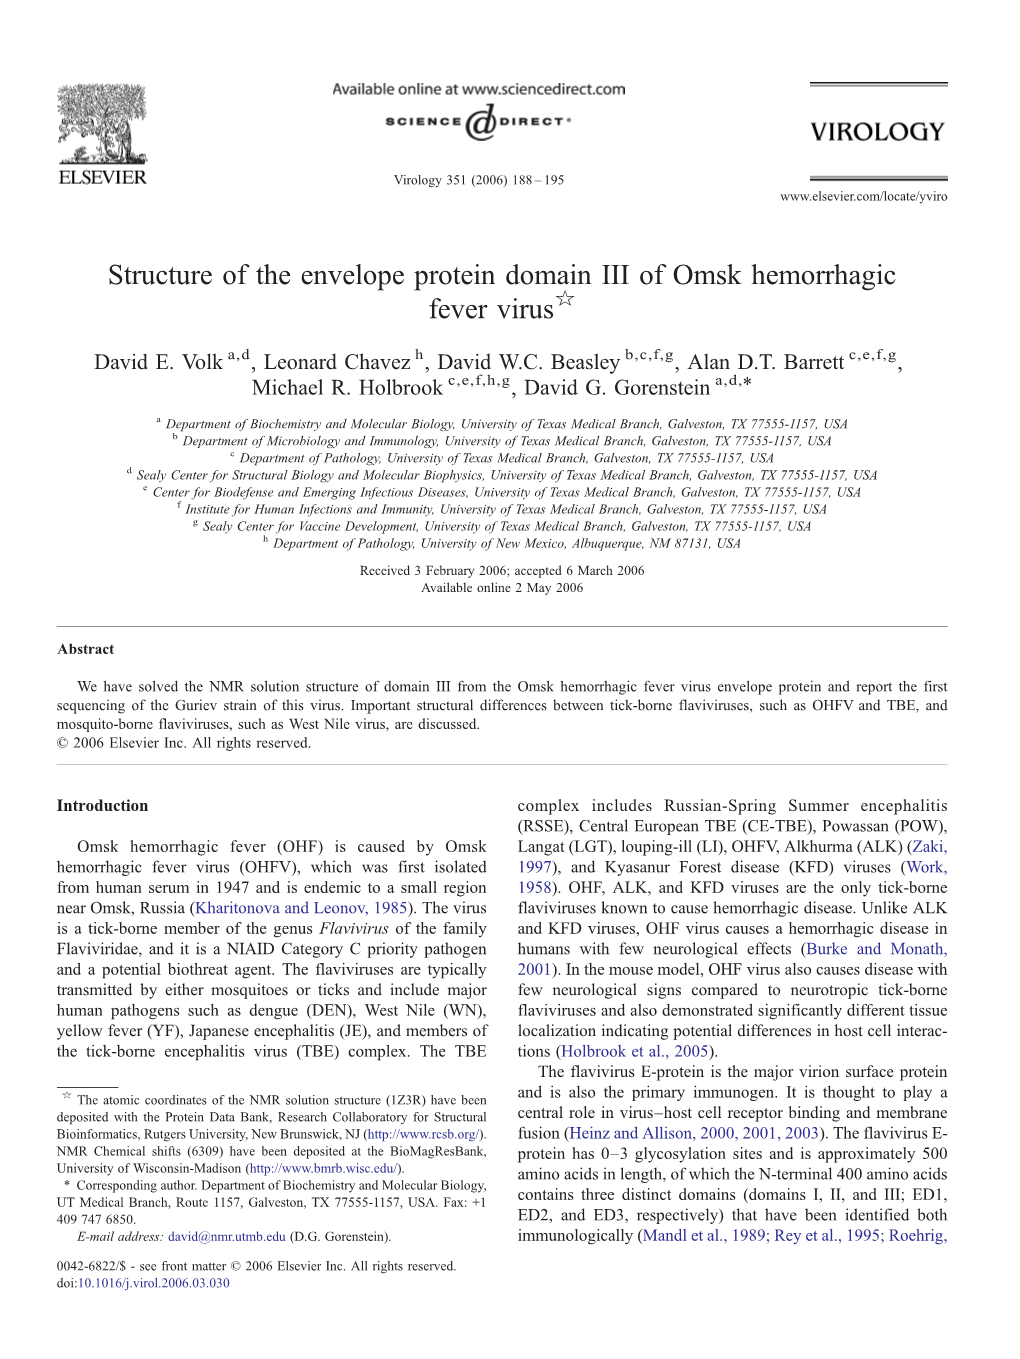 Structure of the Envelope Protein Domain III of Omsk Hemorrhagic Fever Virus☆